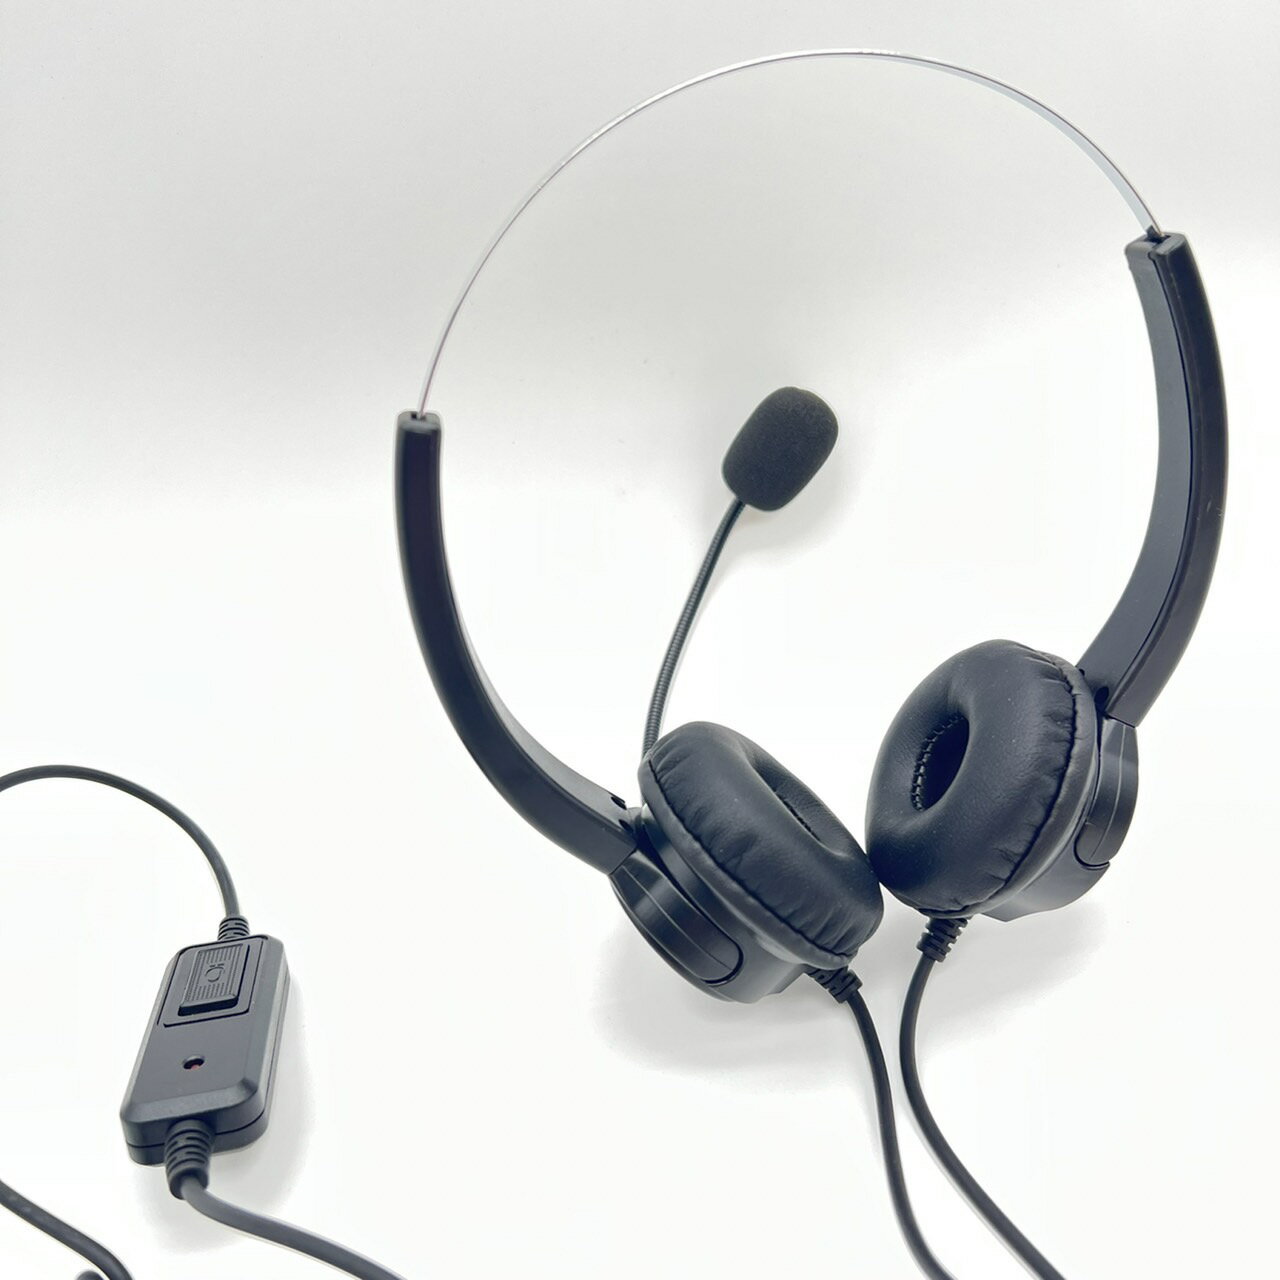 Cisco思科 CP-7821 話機專用 VoIP 電話 雙耳耳機麥克風 含調音靜音 音質清晰配戴舒適